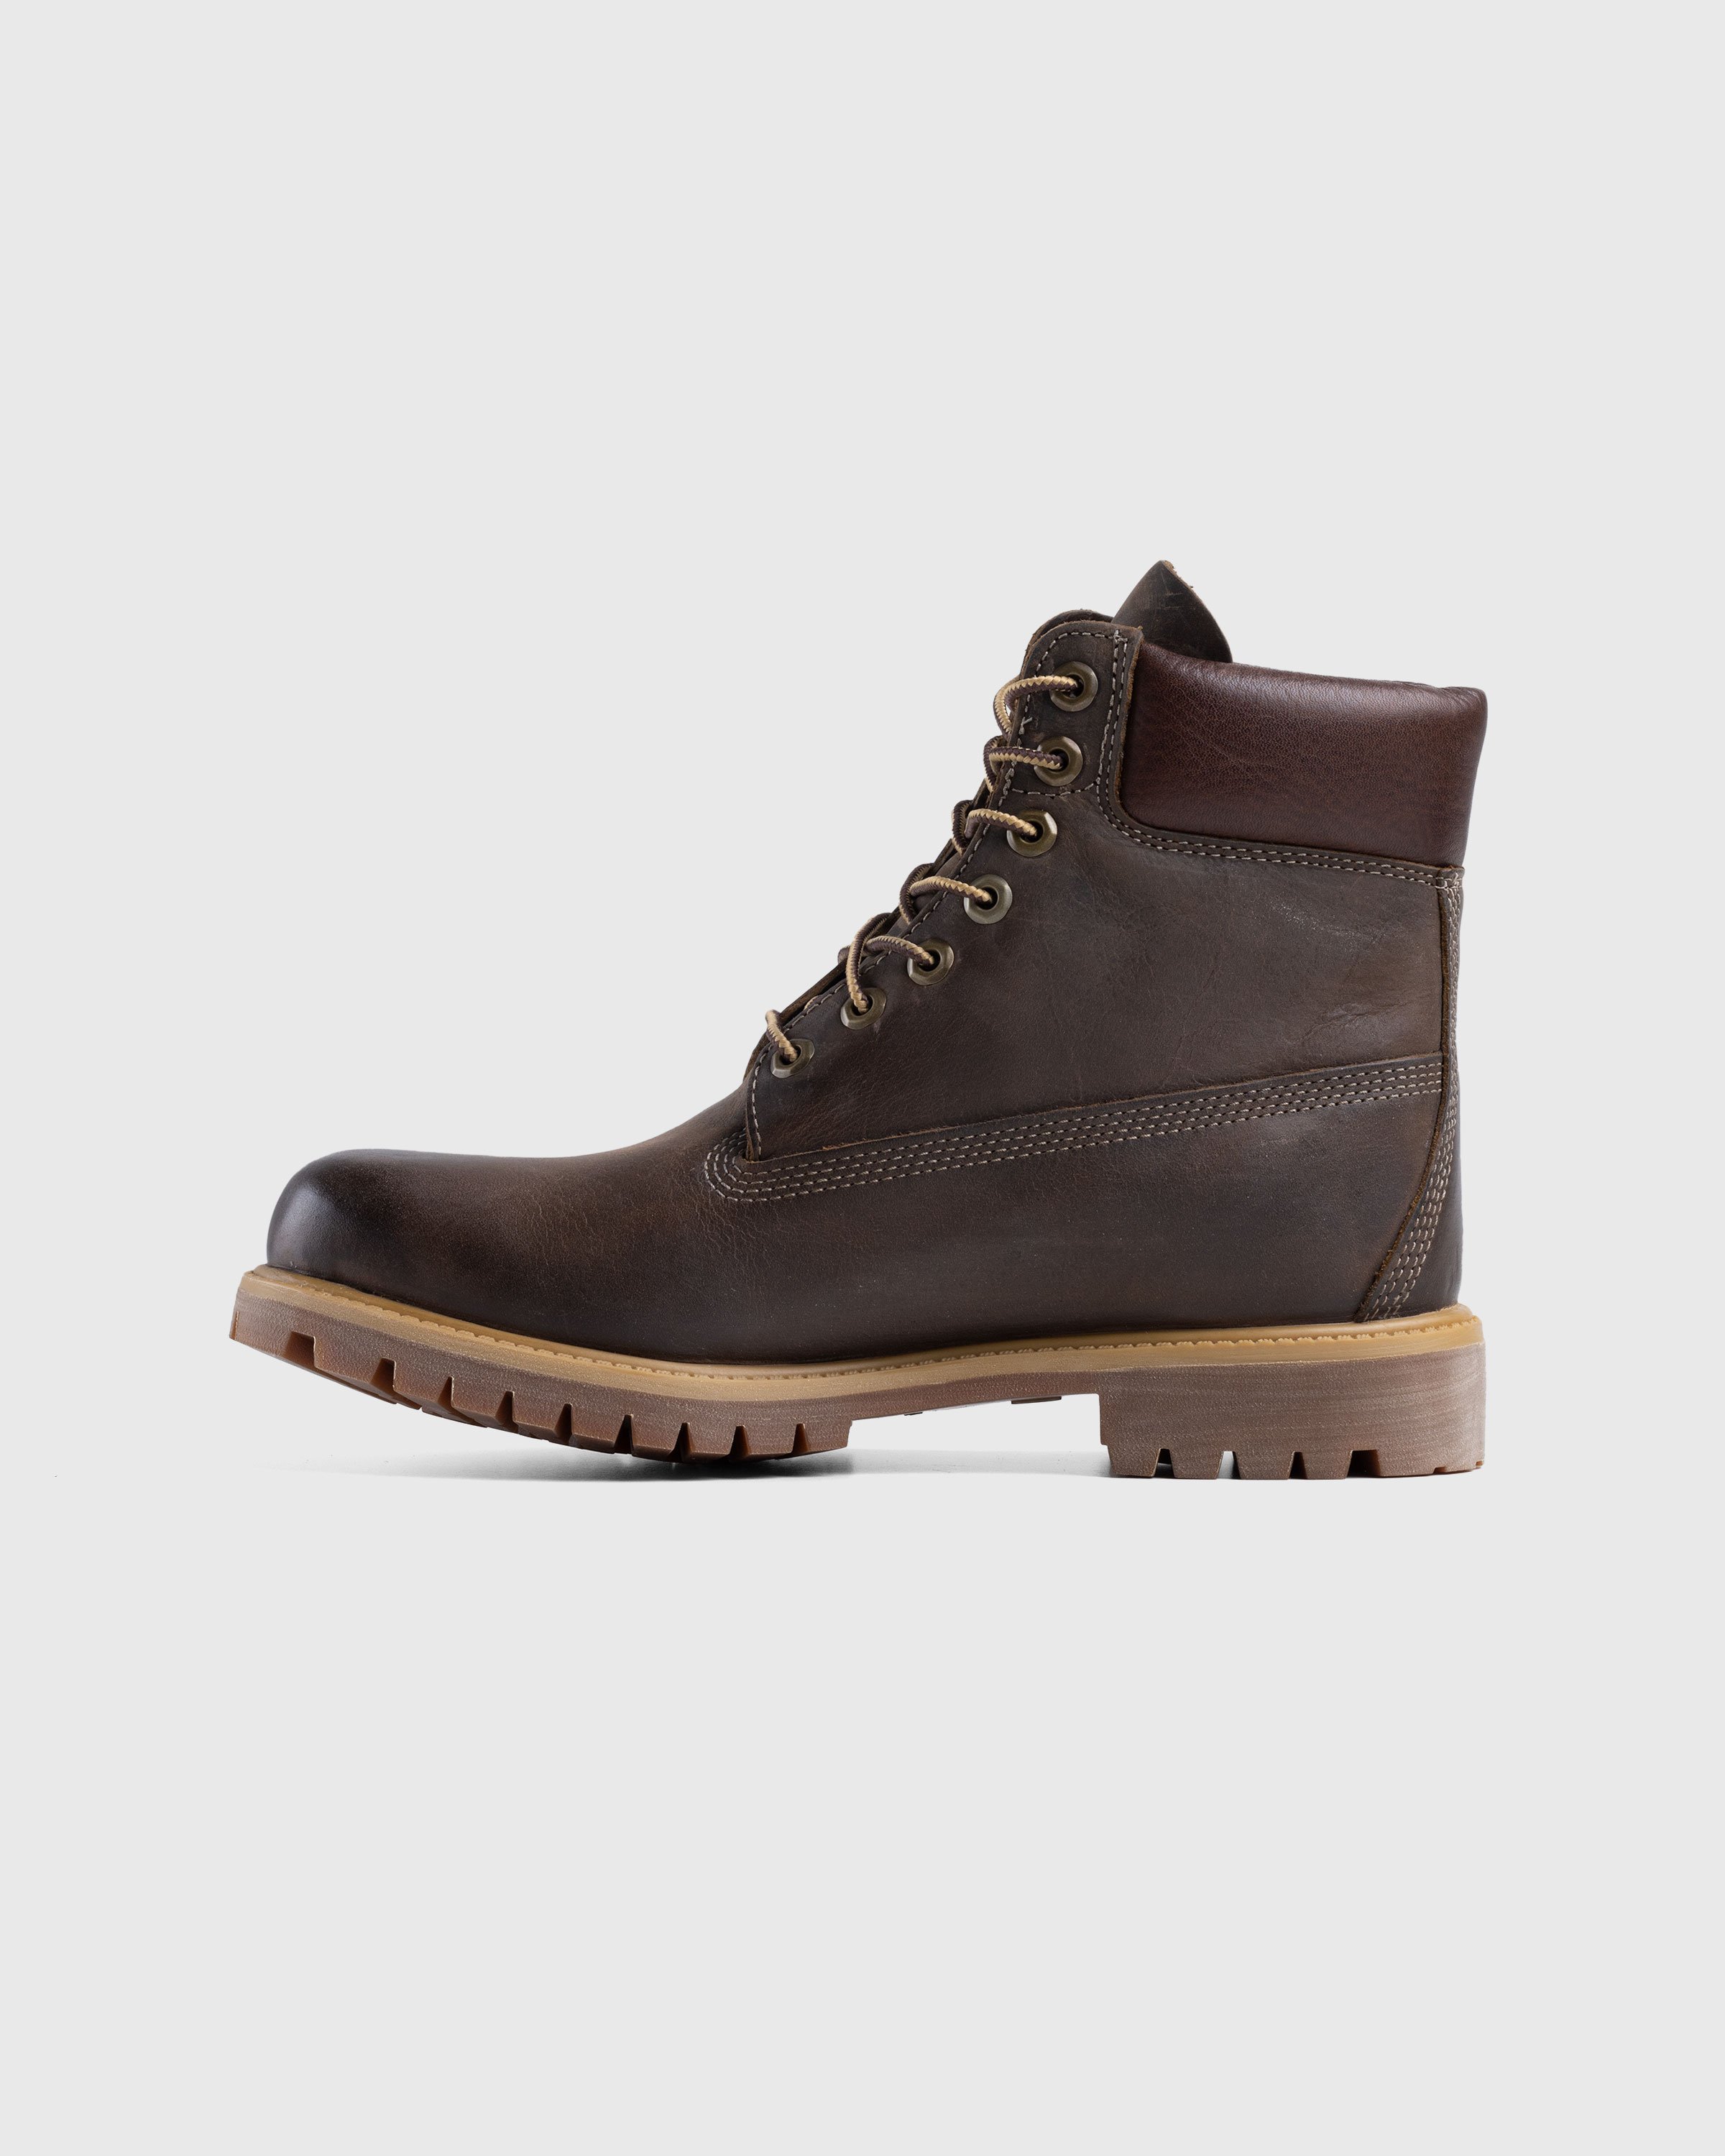 Timberland - Heritage 6 in Premium Brown - Footwear - Brown - Image 6